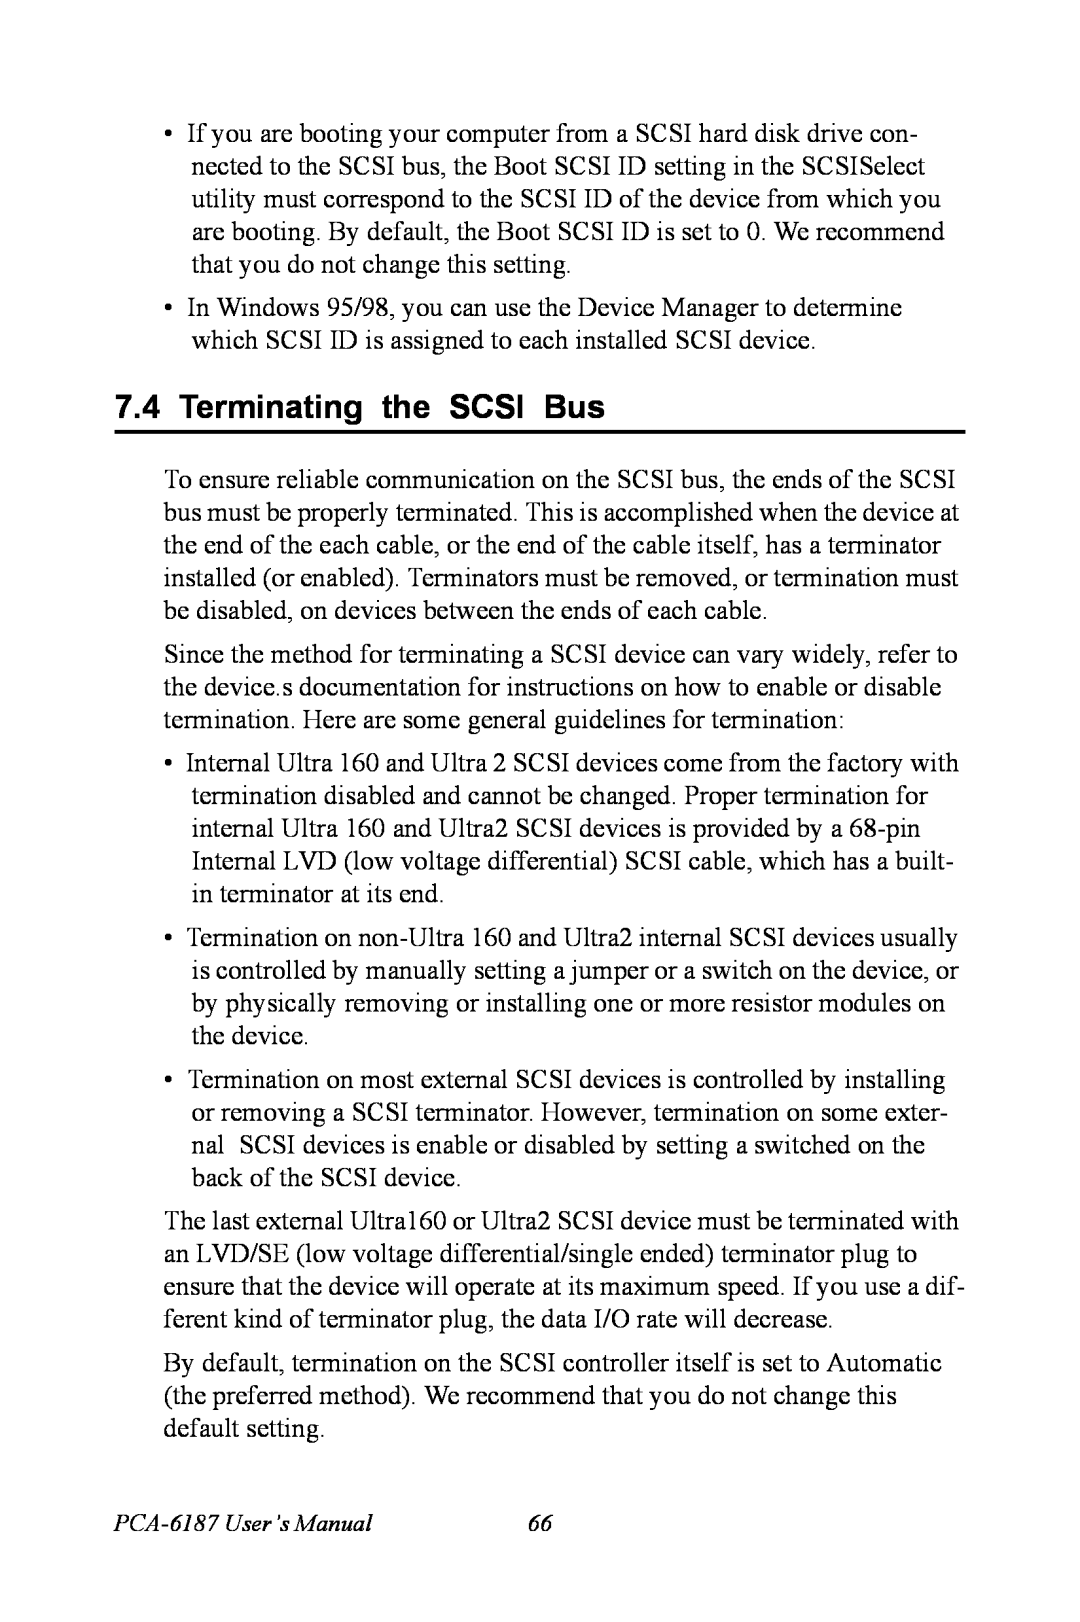 Advantech PCA-6187 user manual Terminating the SCSI Bus 